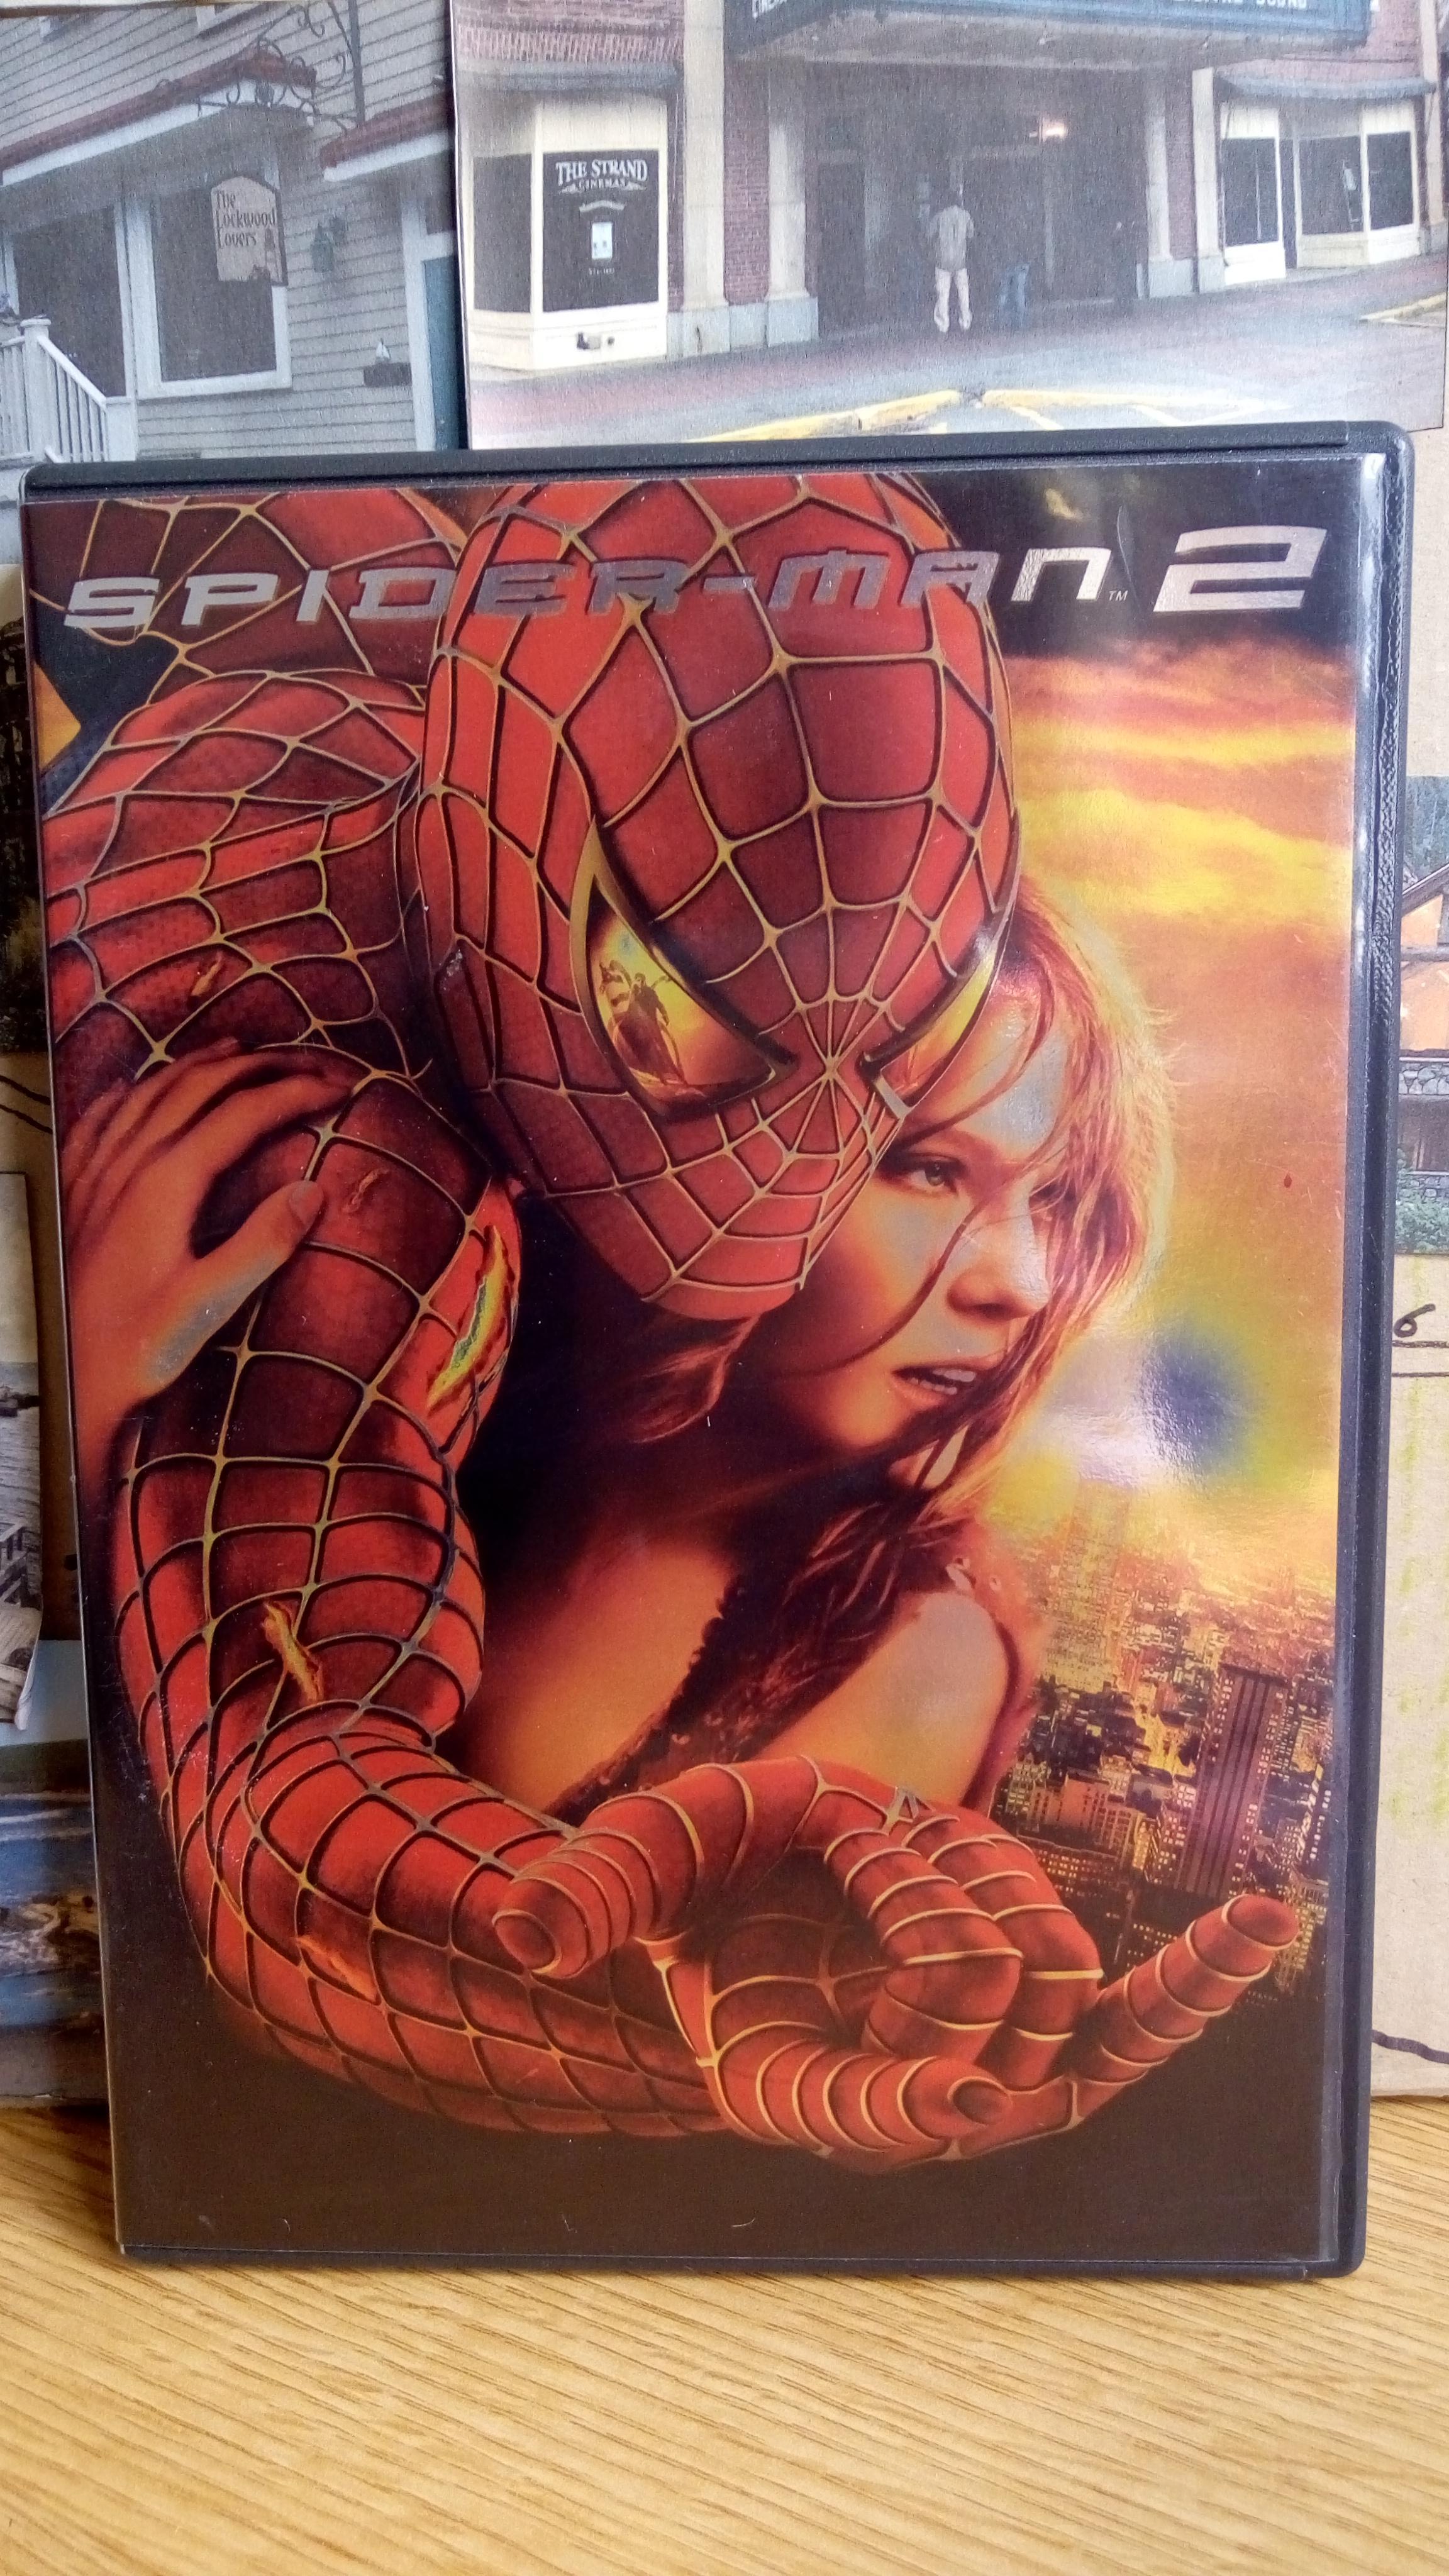 troc de troc spiderman 2  (sam raimi) - dvd image 0